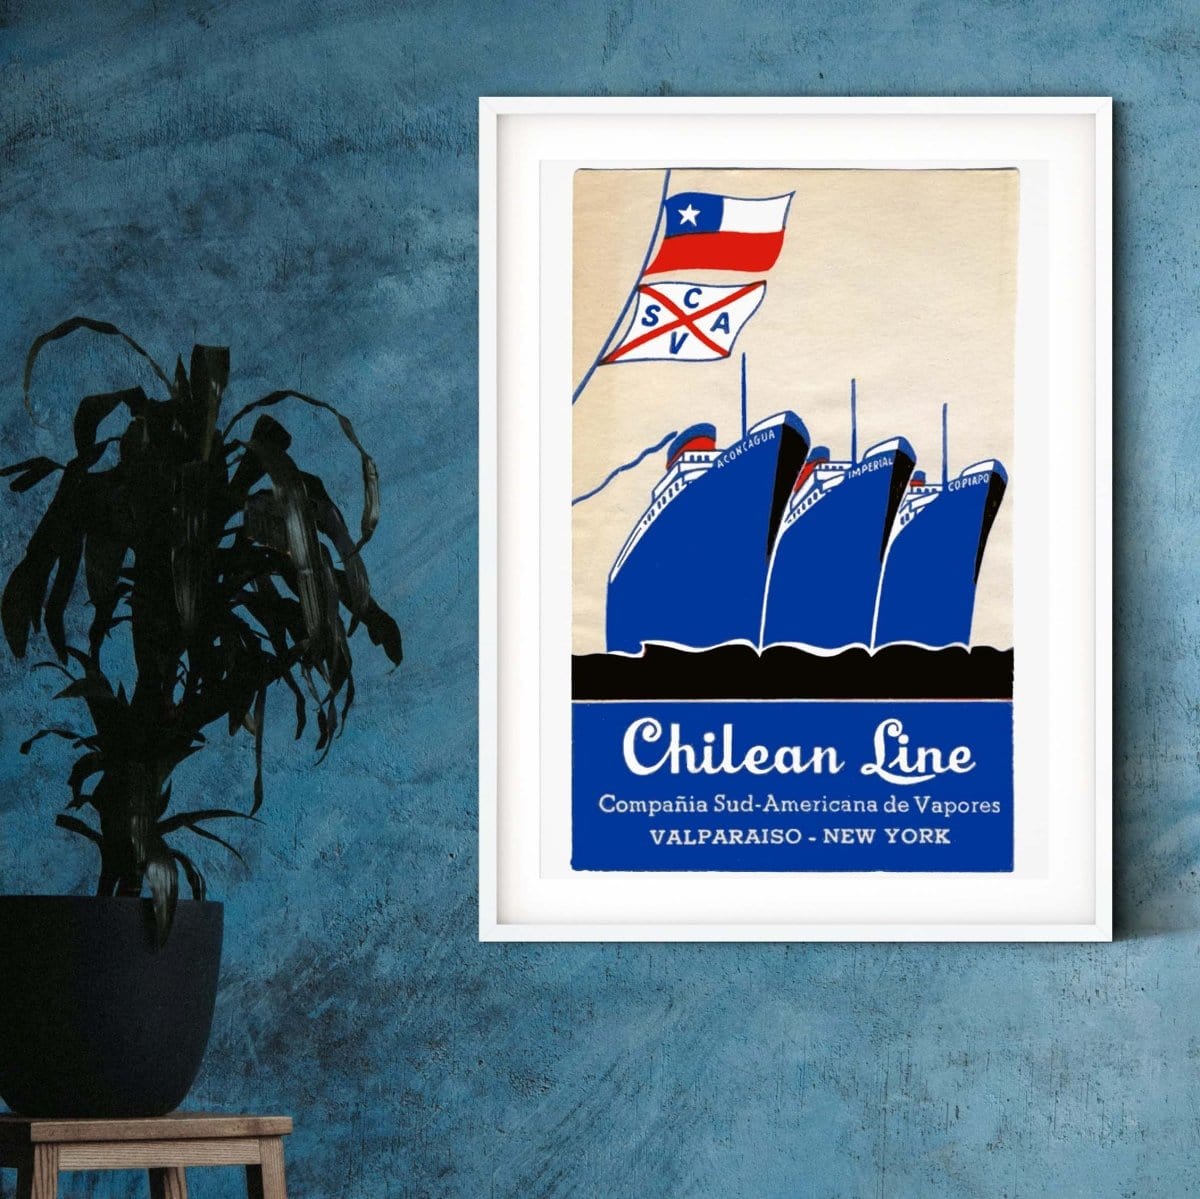 Chilean Line art deco travel posters, vintage travel boat print